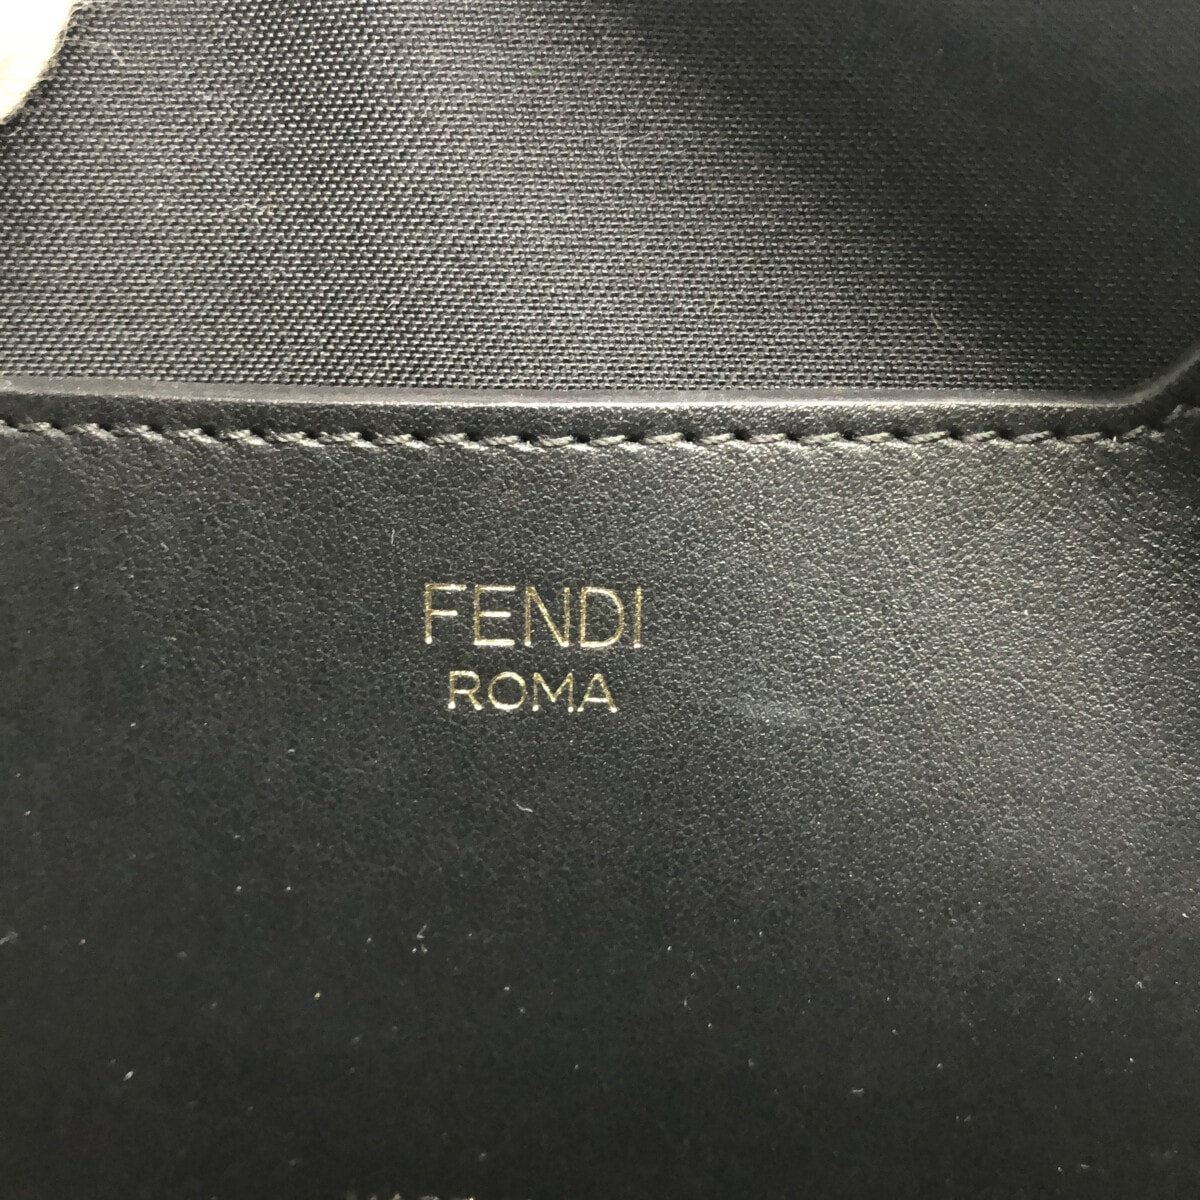 Fendi Camera Case Bag in Black Leather - Vault 55 | Preowned Designer Handbags